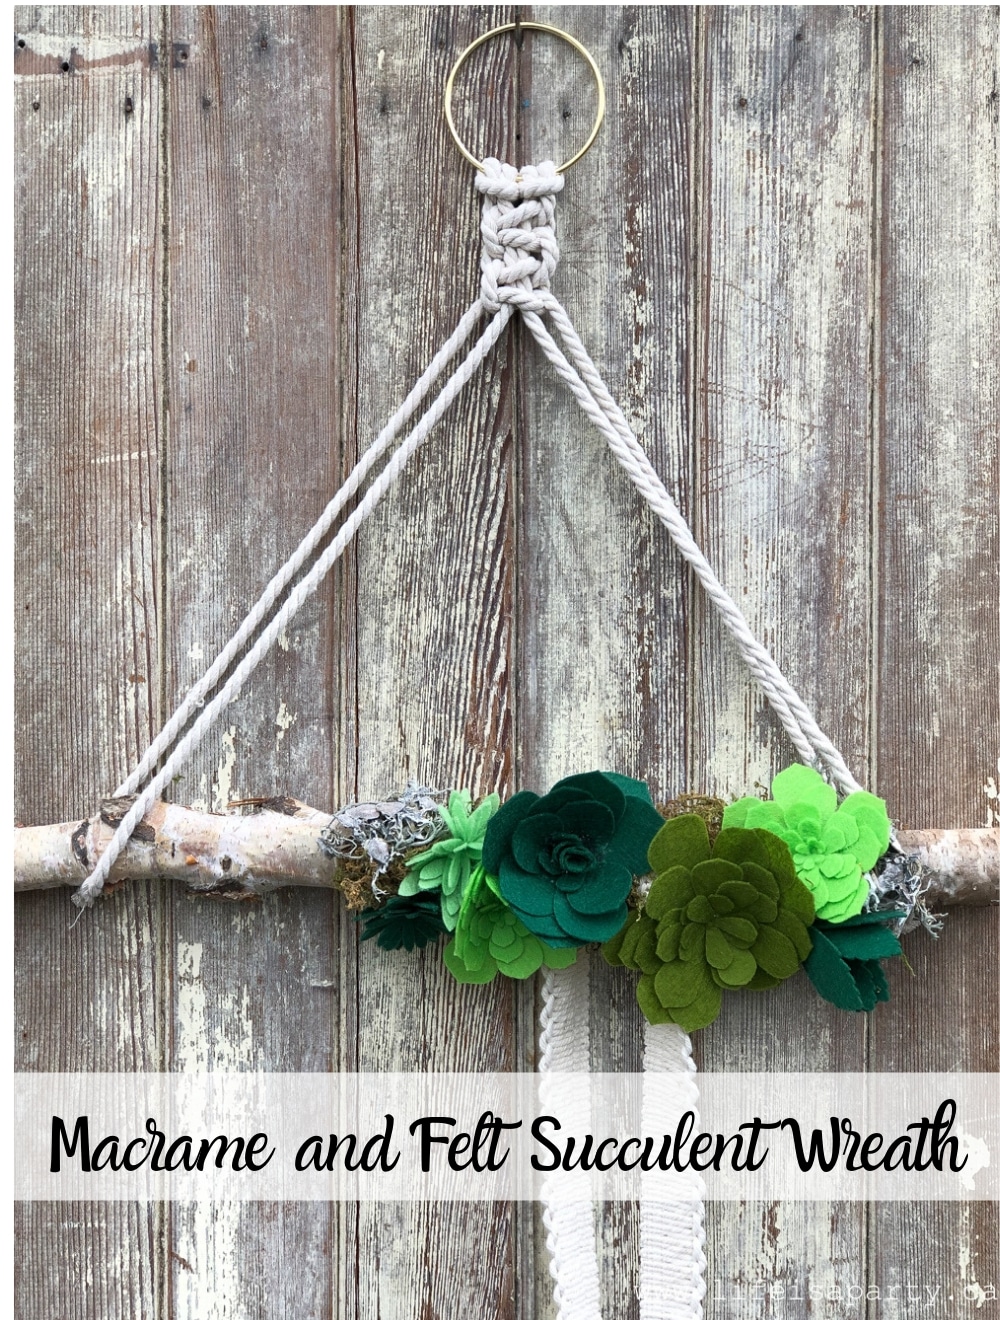 Macrame and Felt Succulent Wreath